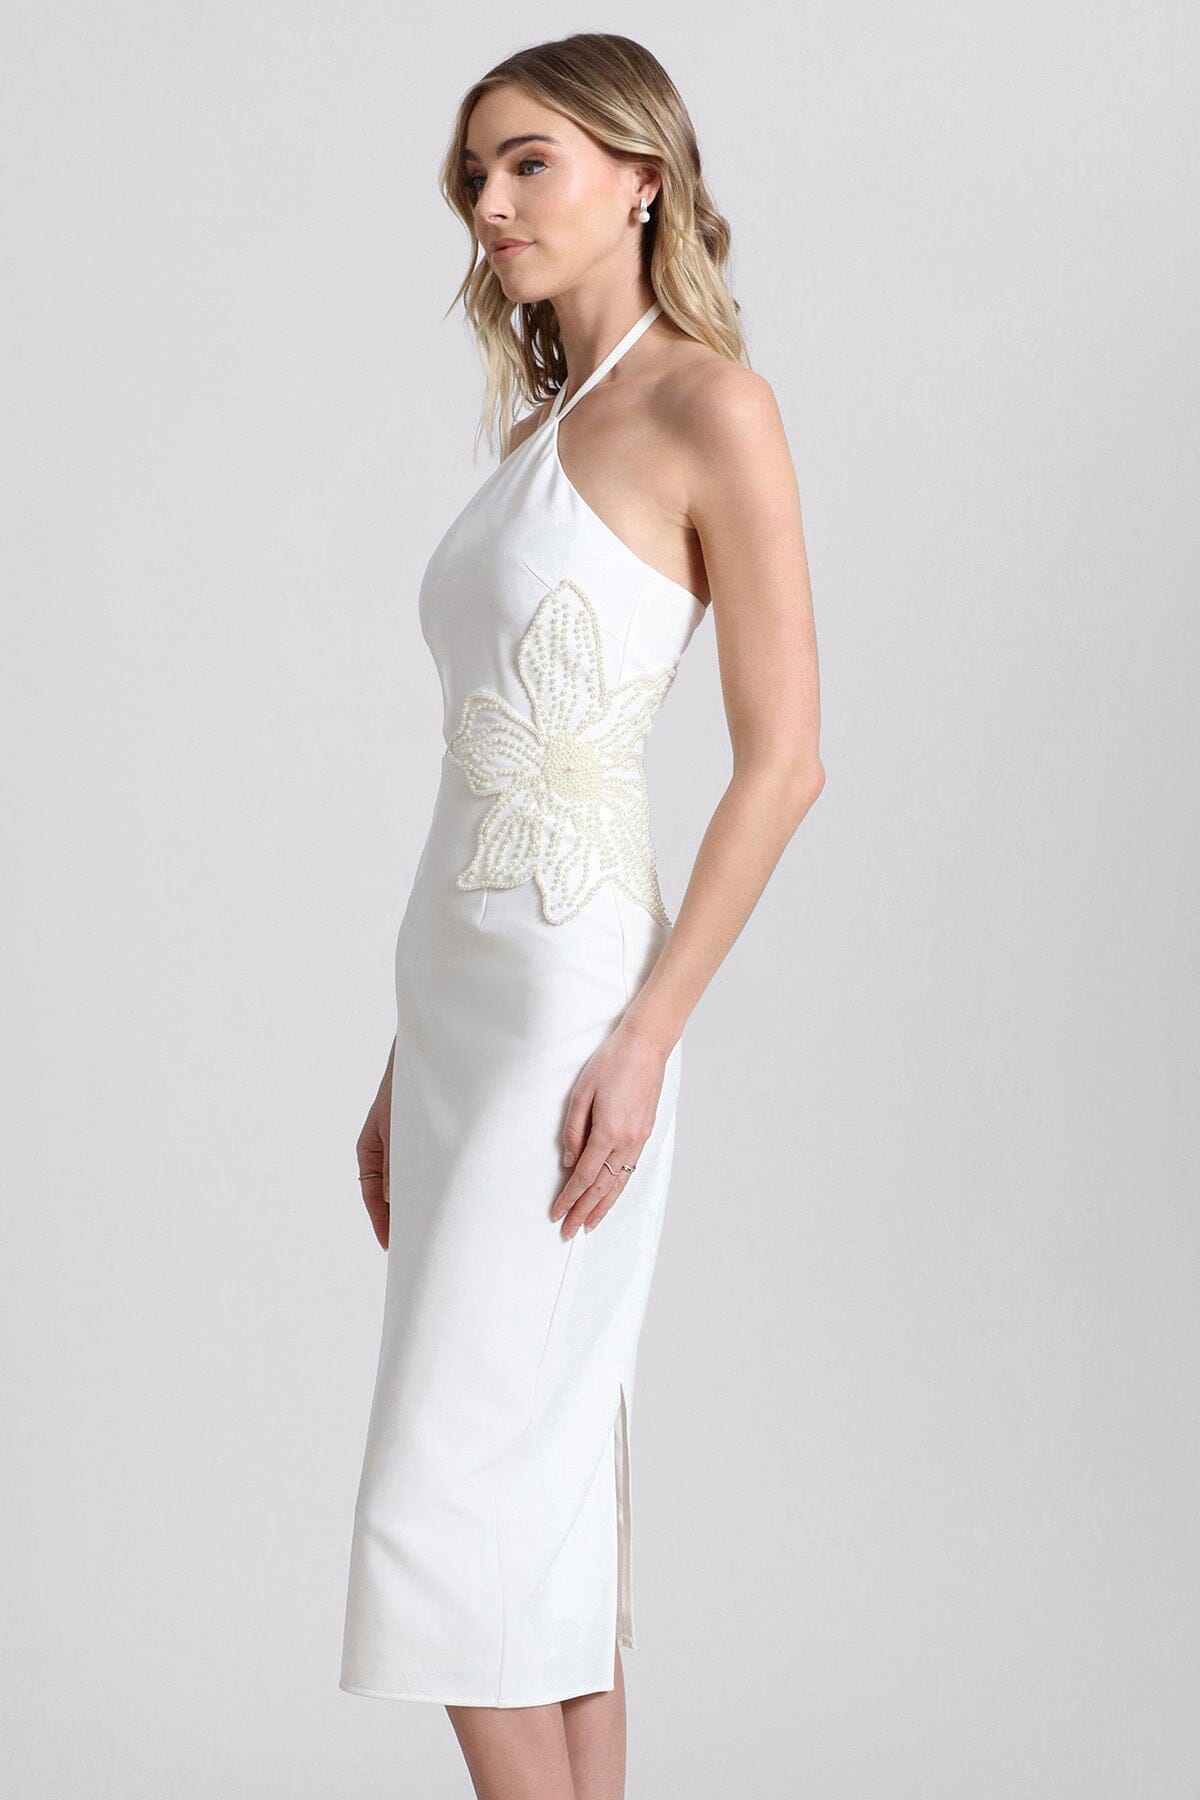 all white flower pearl embellished cut-out halter dress - affordable designer white dresses by Avec Les Filles